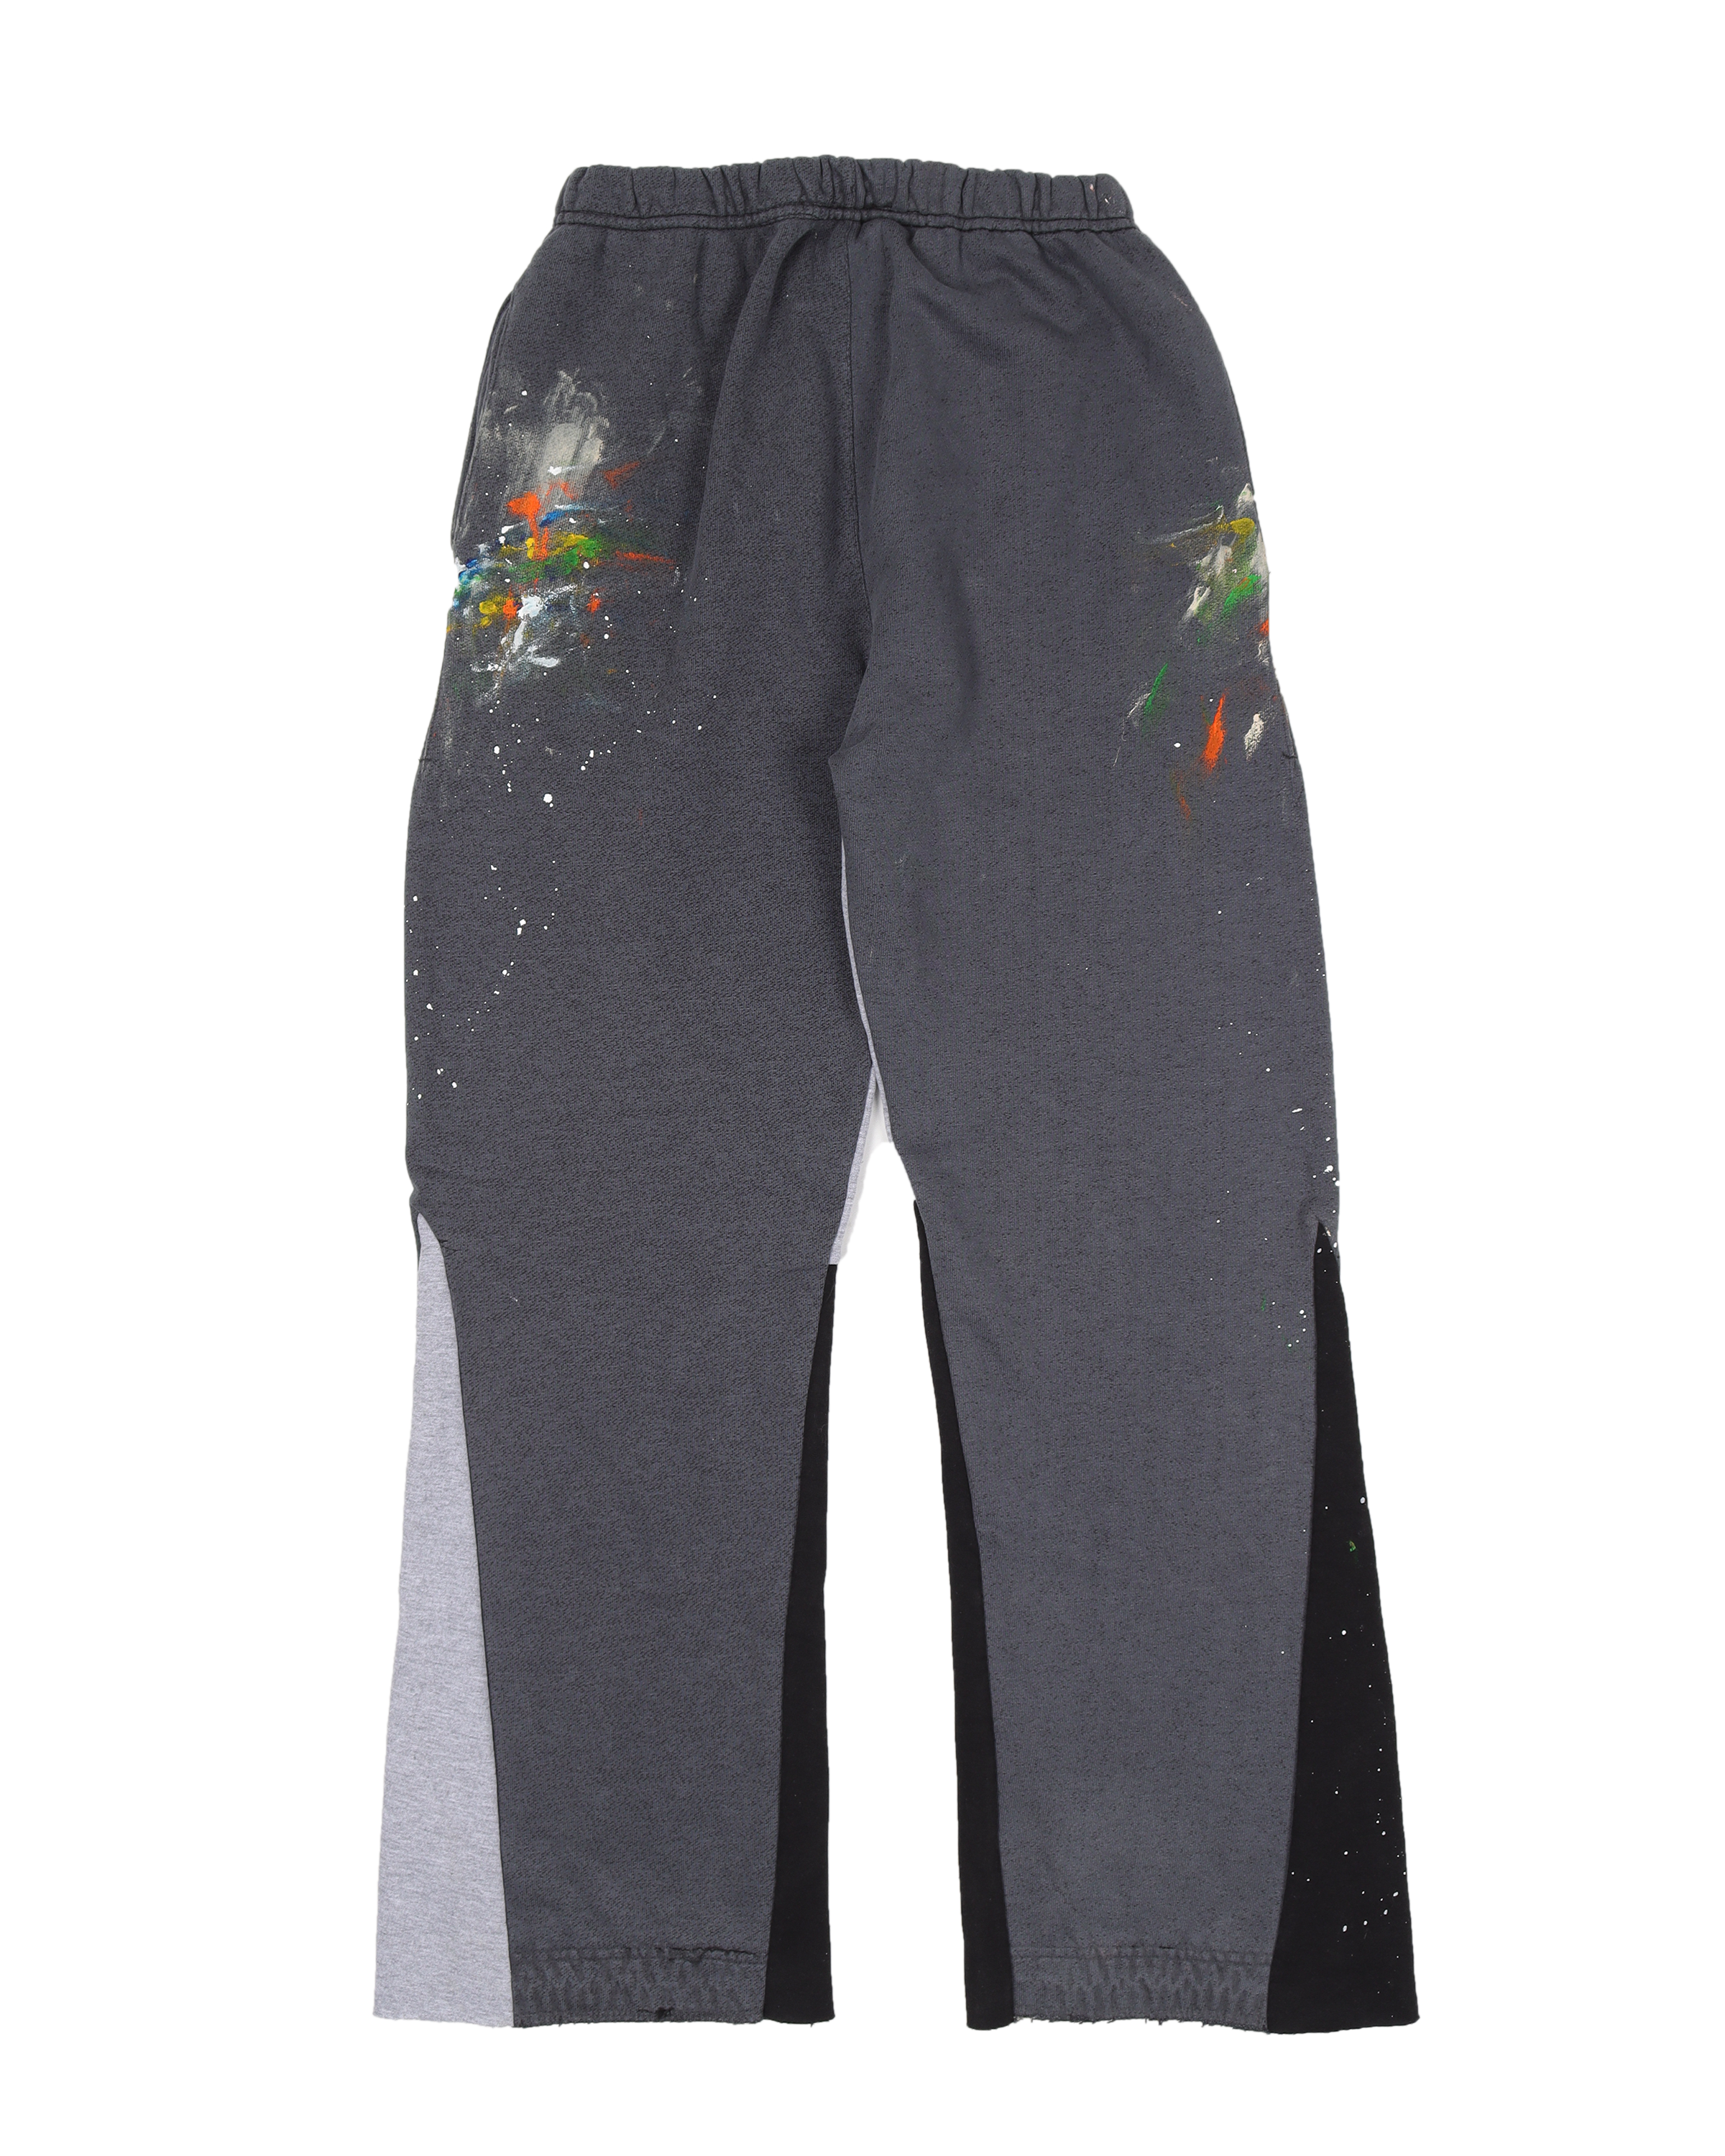 "LA FLARE" Painted Sweatpants